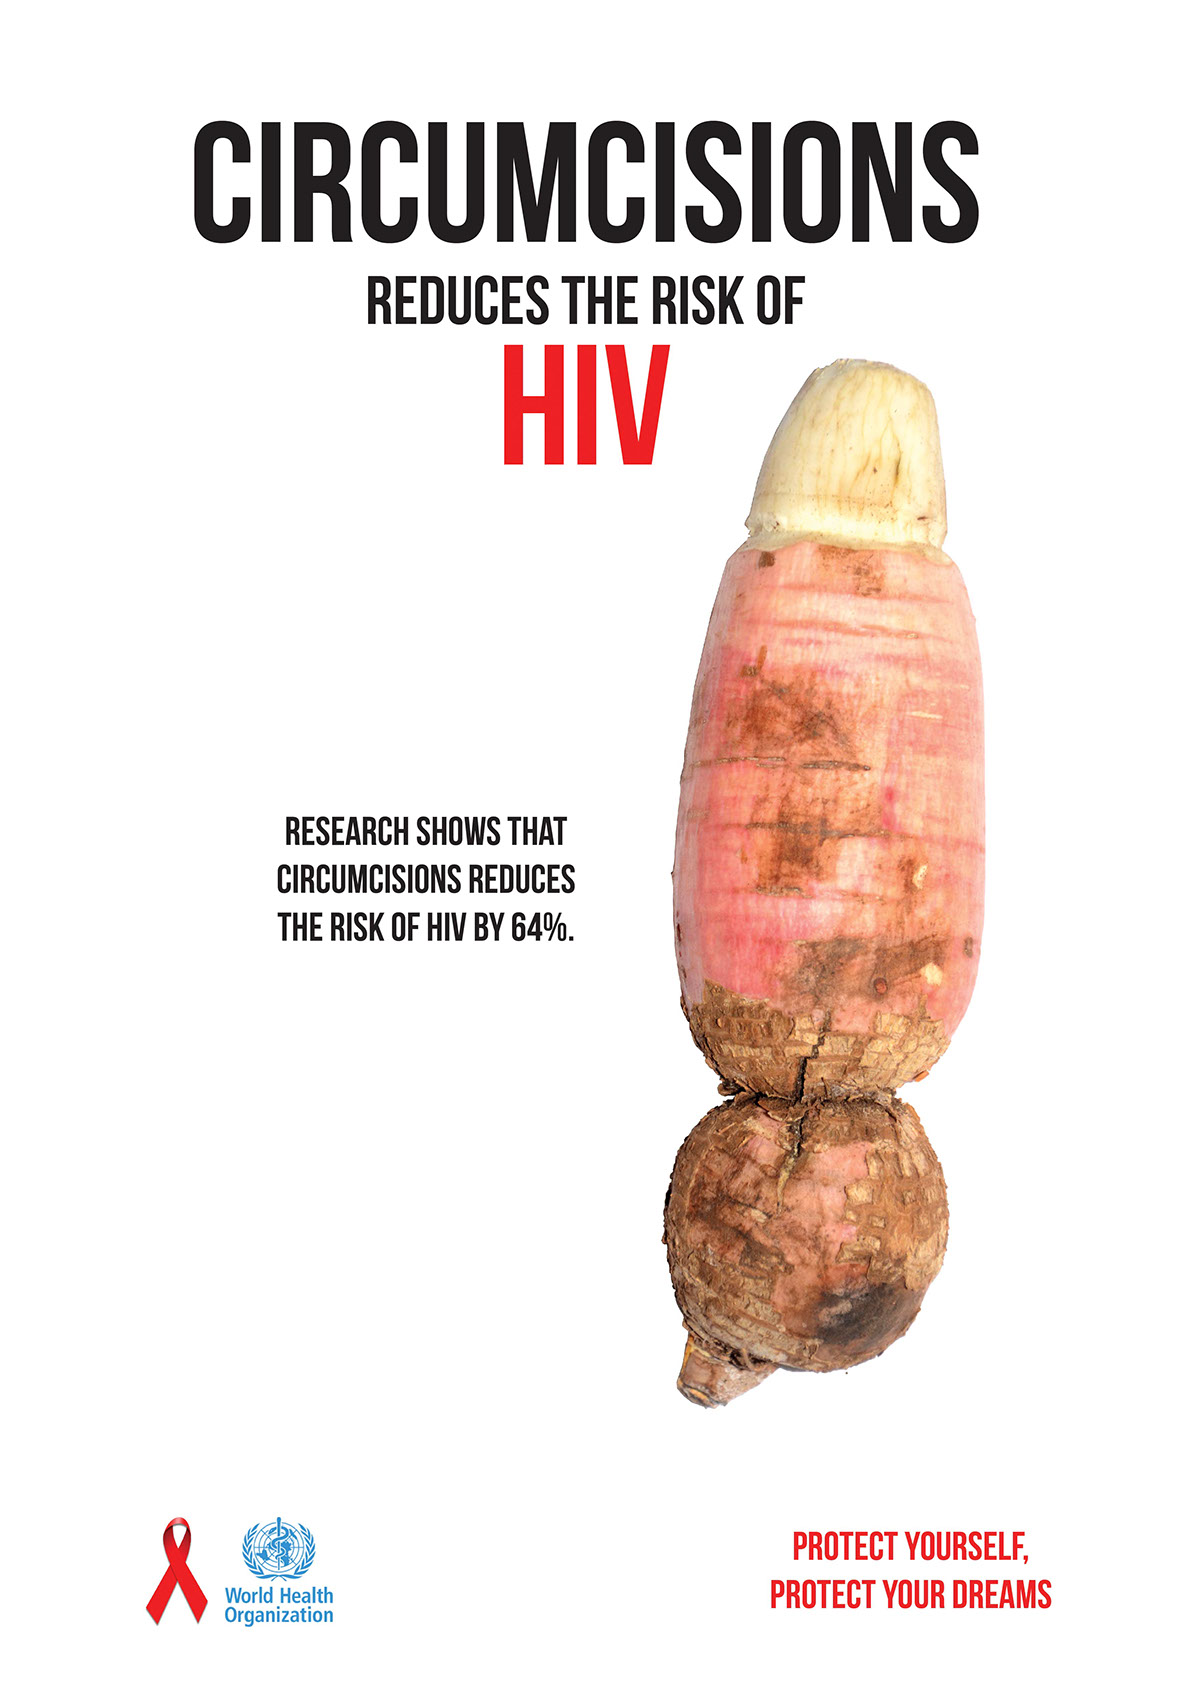 hiv awareness campaign circumcise